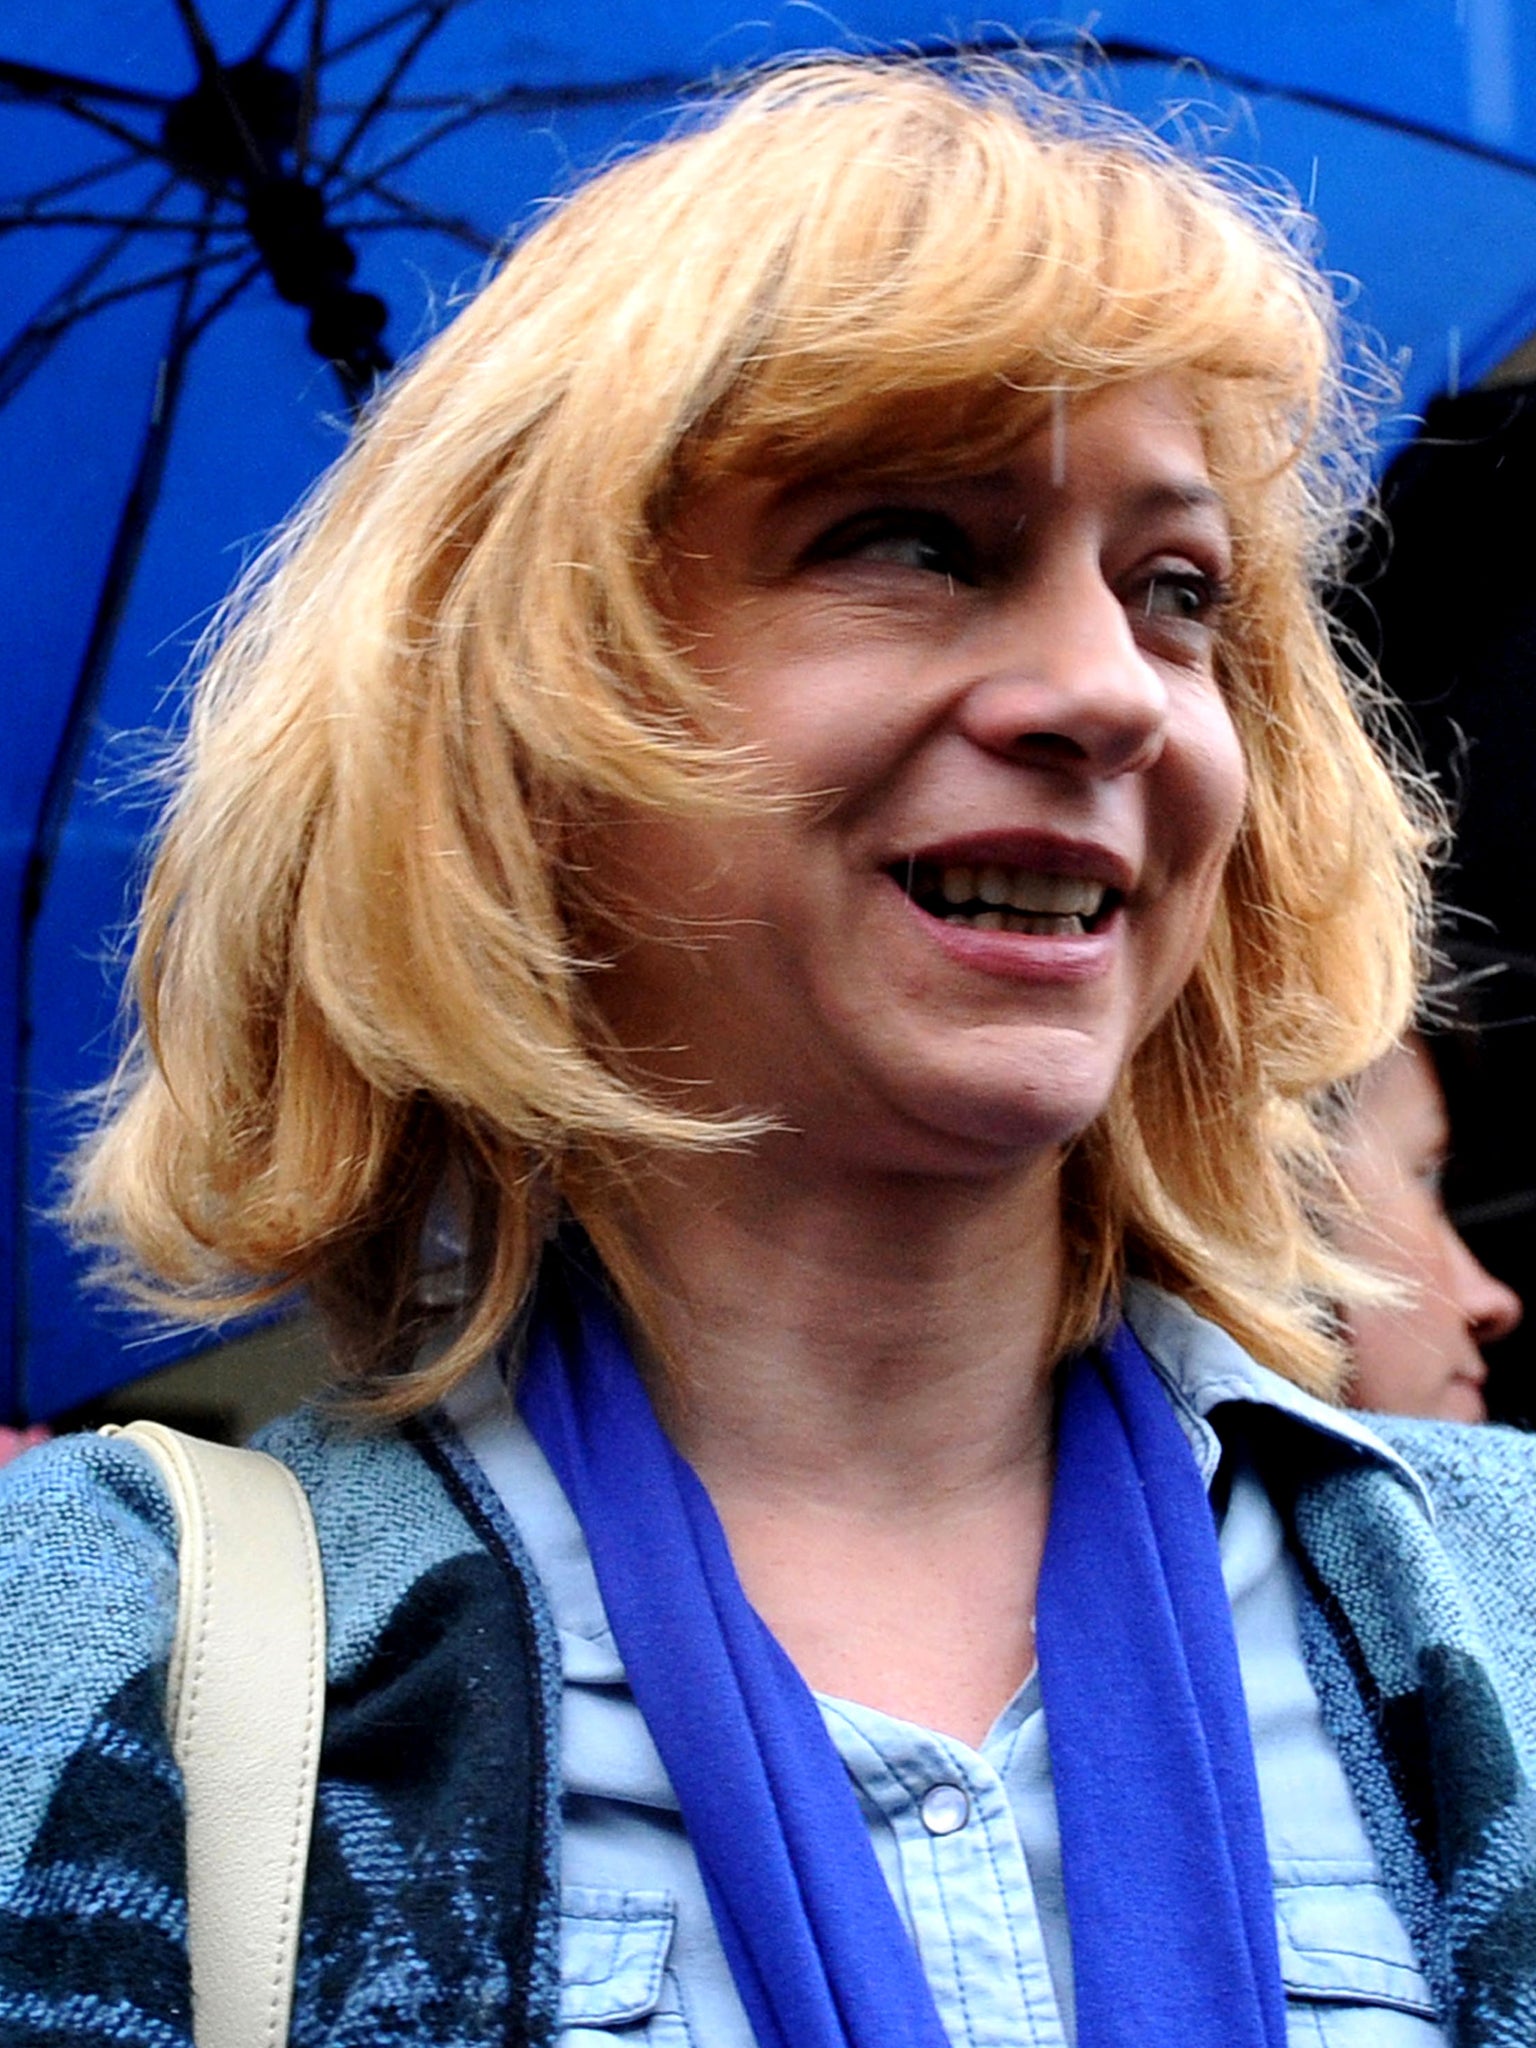 Irina Khalip outside court in 2011